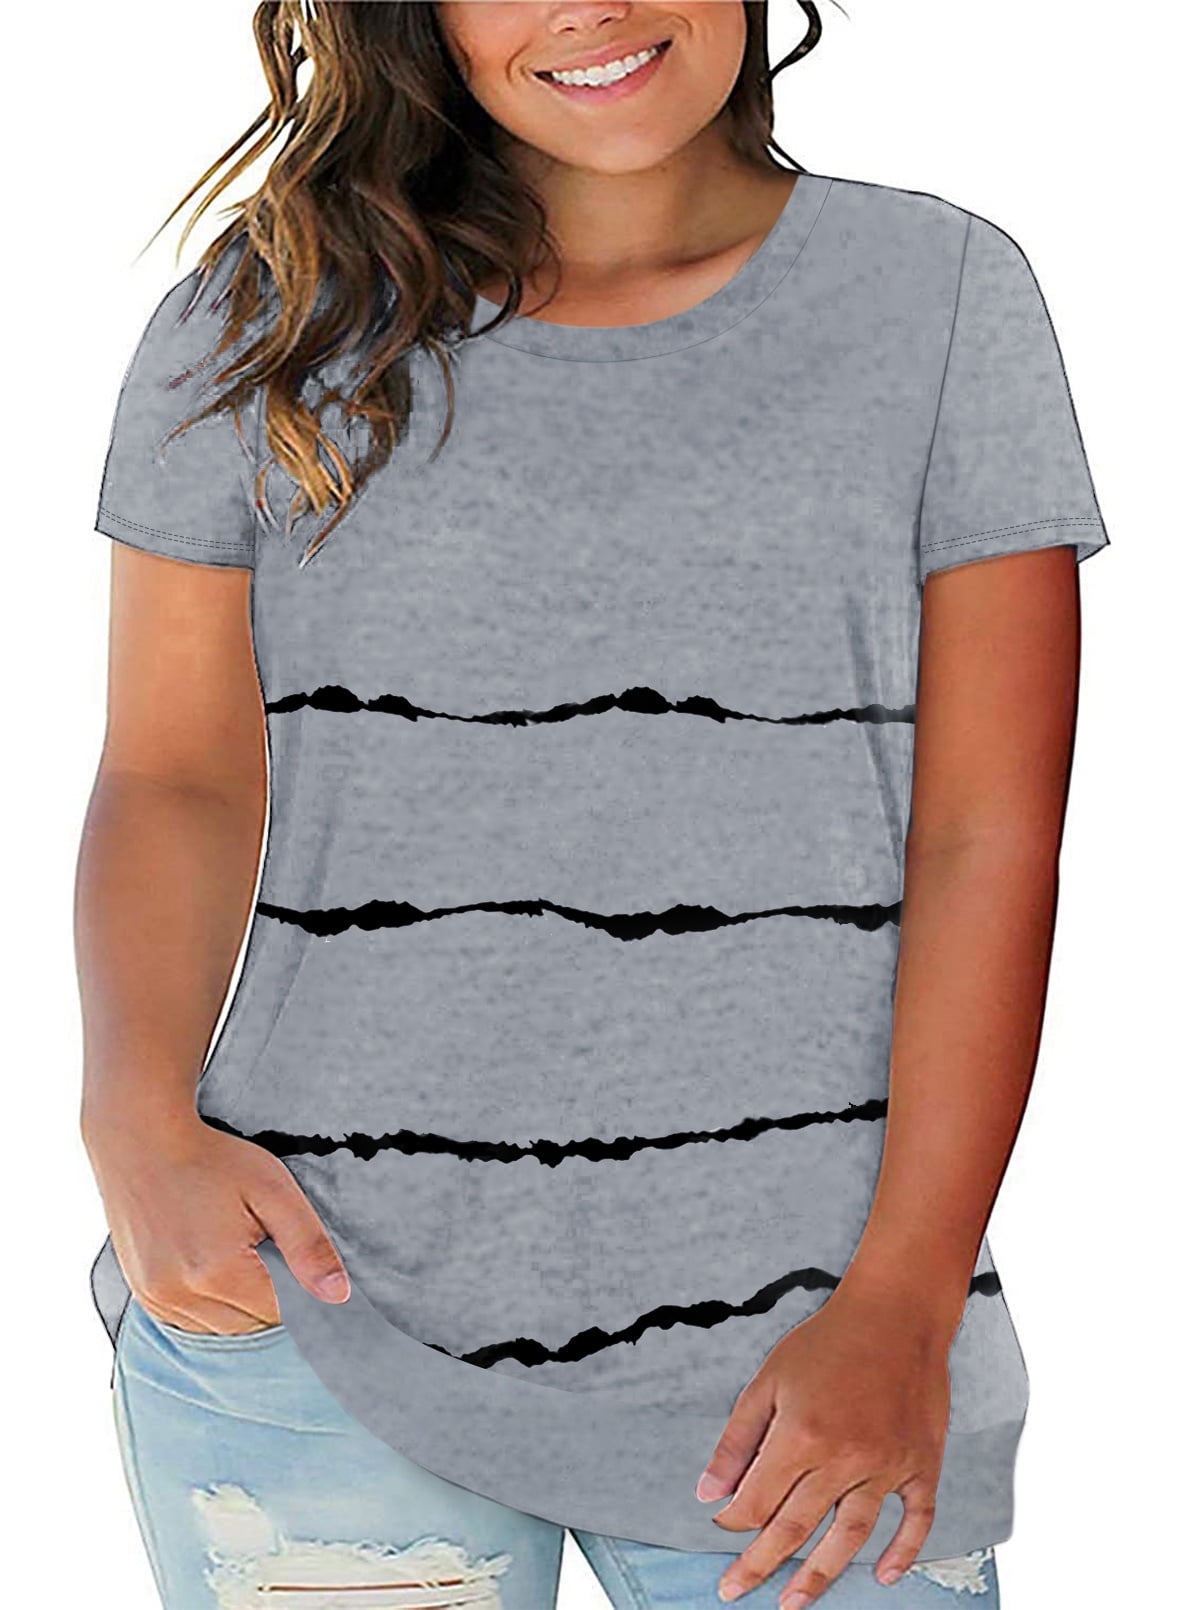 ROSRISS Plus Size Tank Tops for Women Summer Sleeveless T Shirts V Neck Tunics 